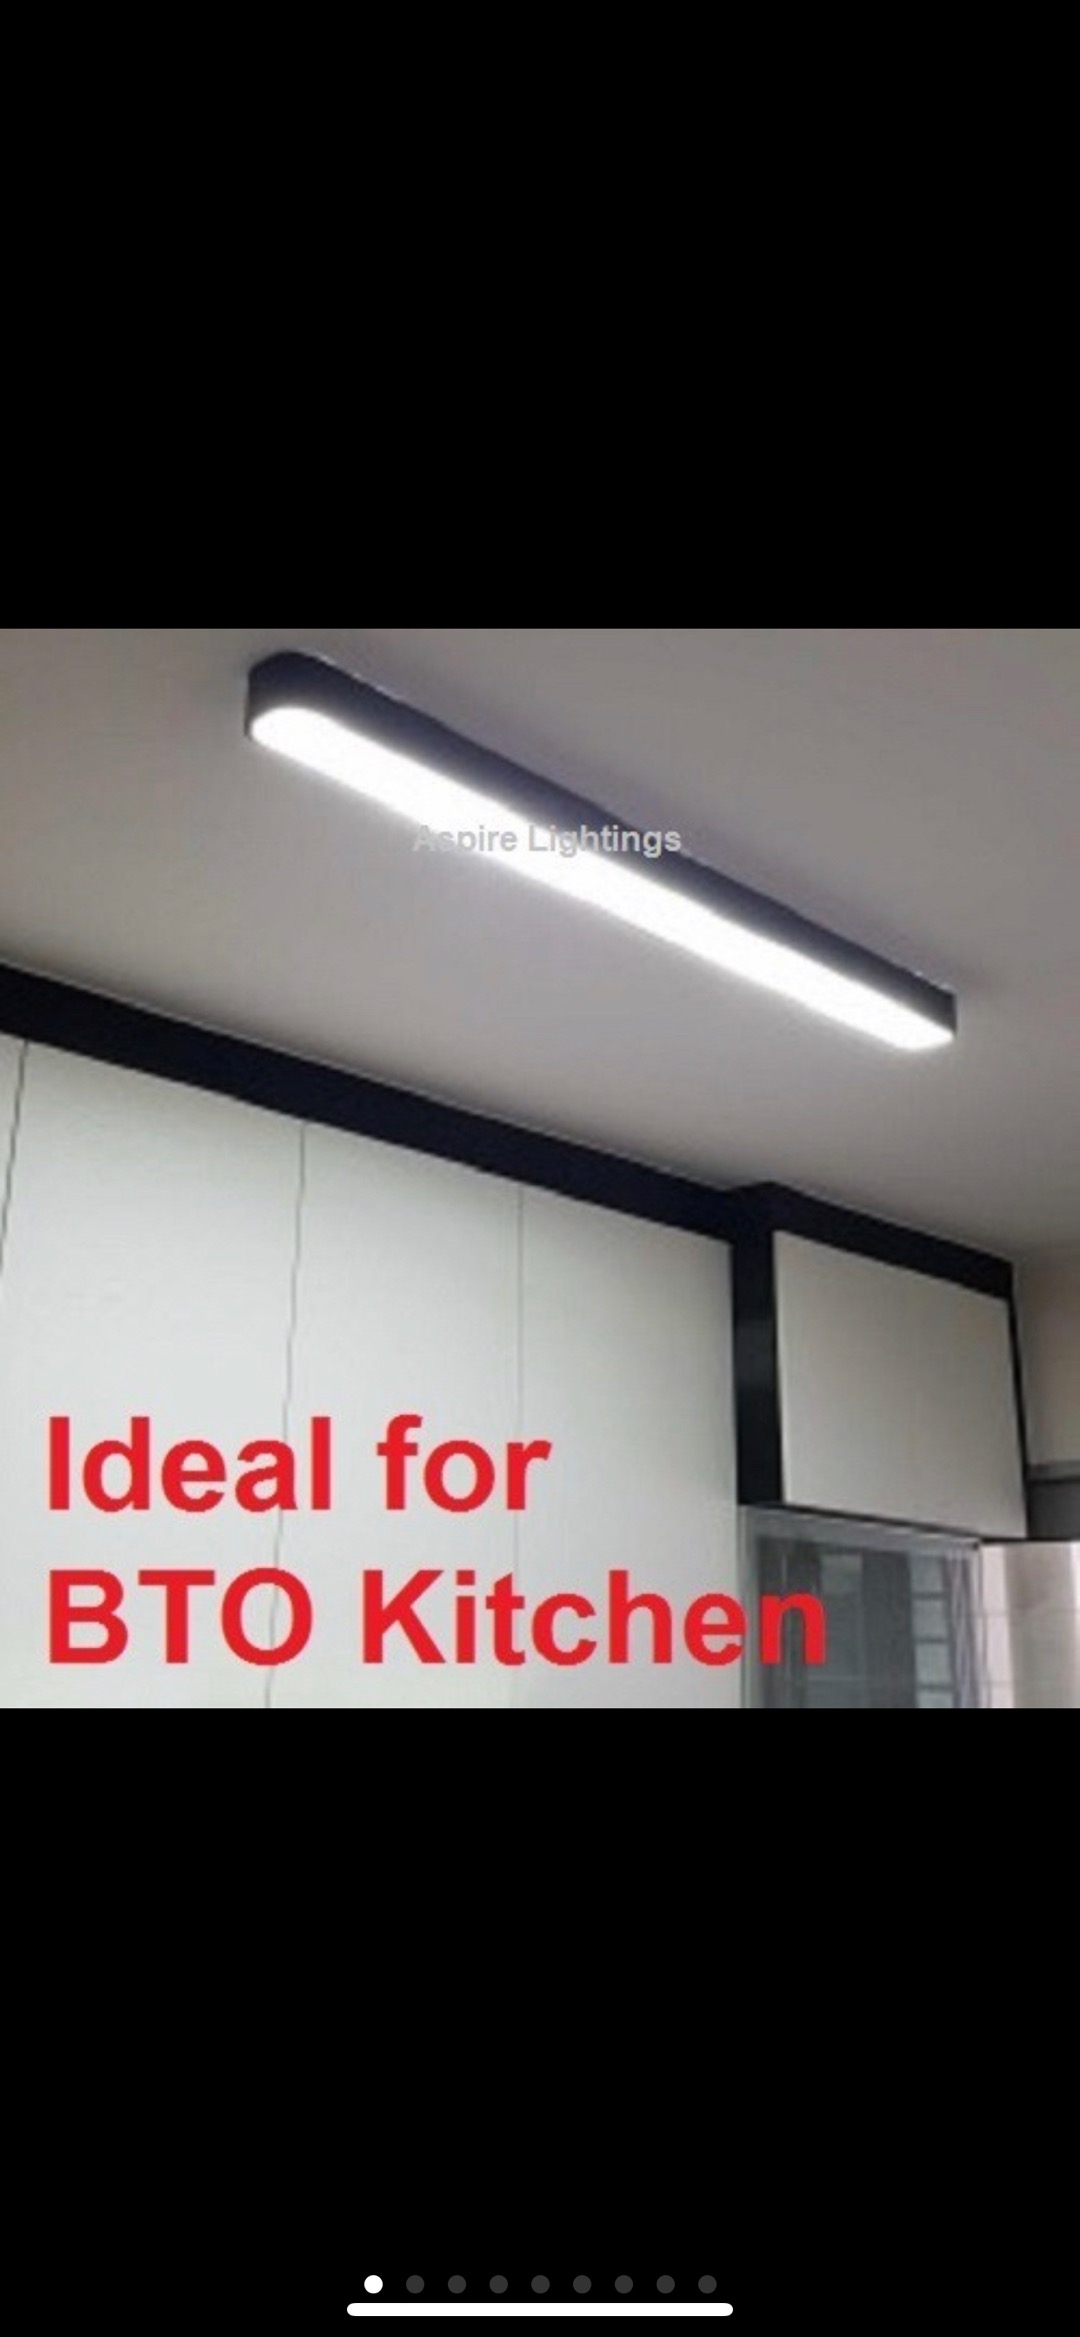 LED Ceiling Pendant Linear Light Home BTO Kitchen Study Living Bedroom Office Shopee Singapore